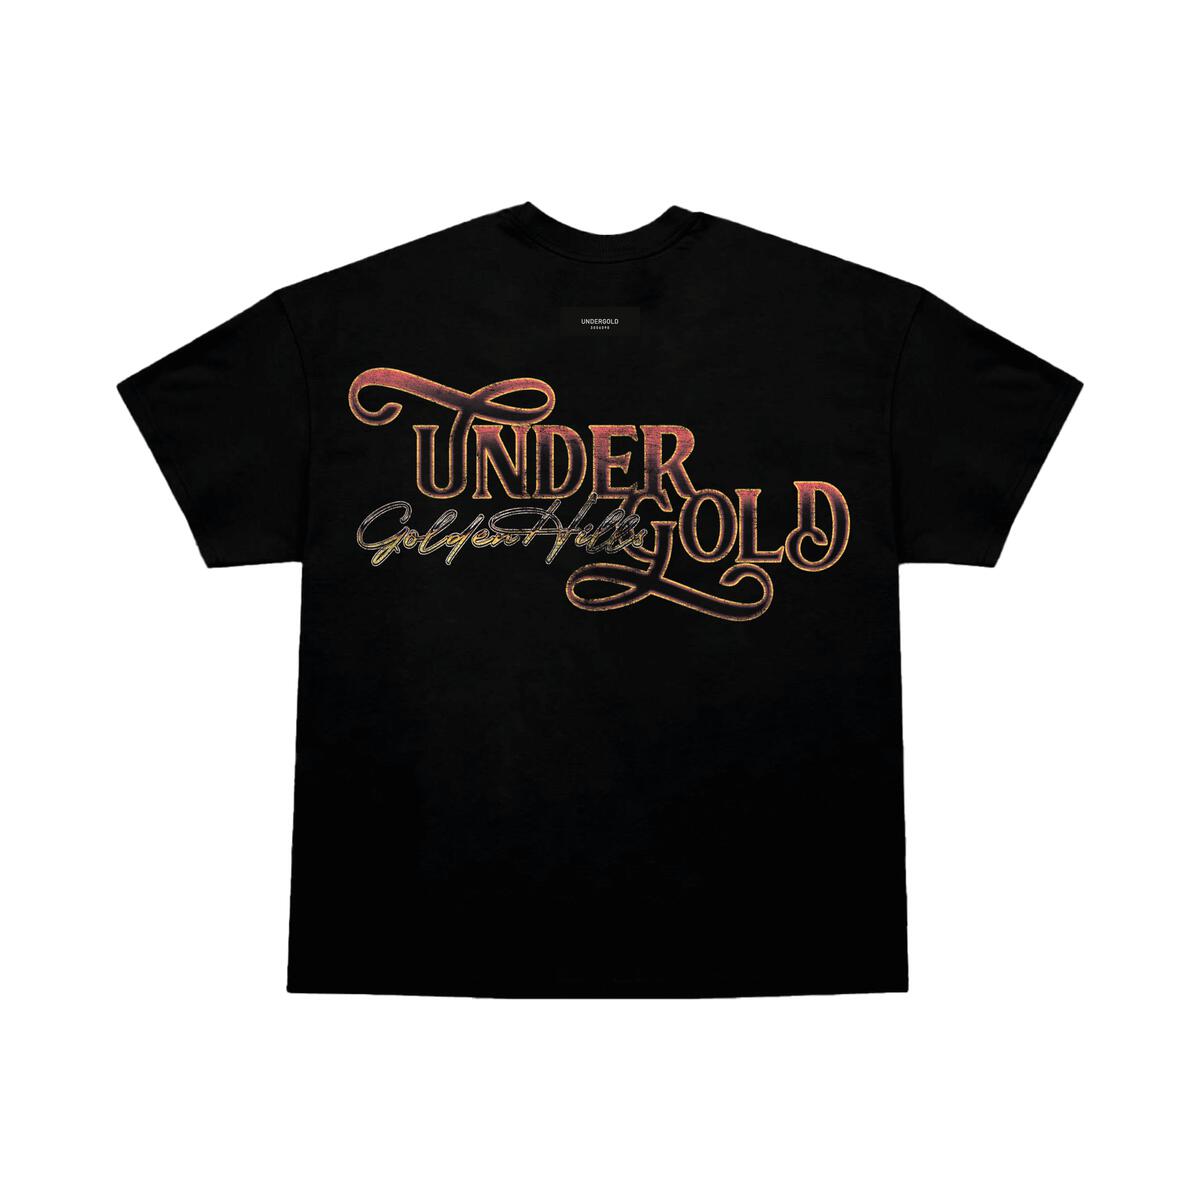 Undergold Golden Hills III Vintage Basic T-shirt Black